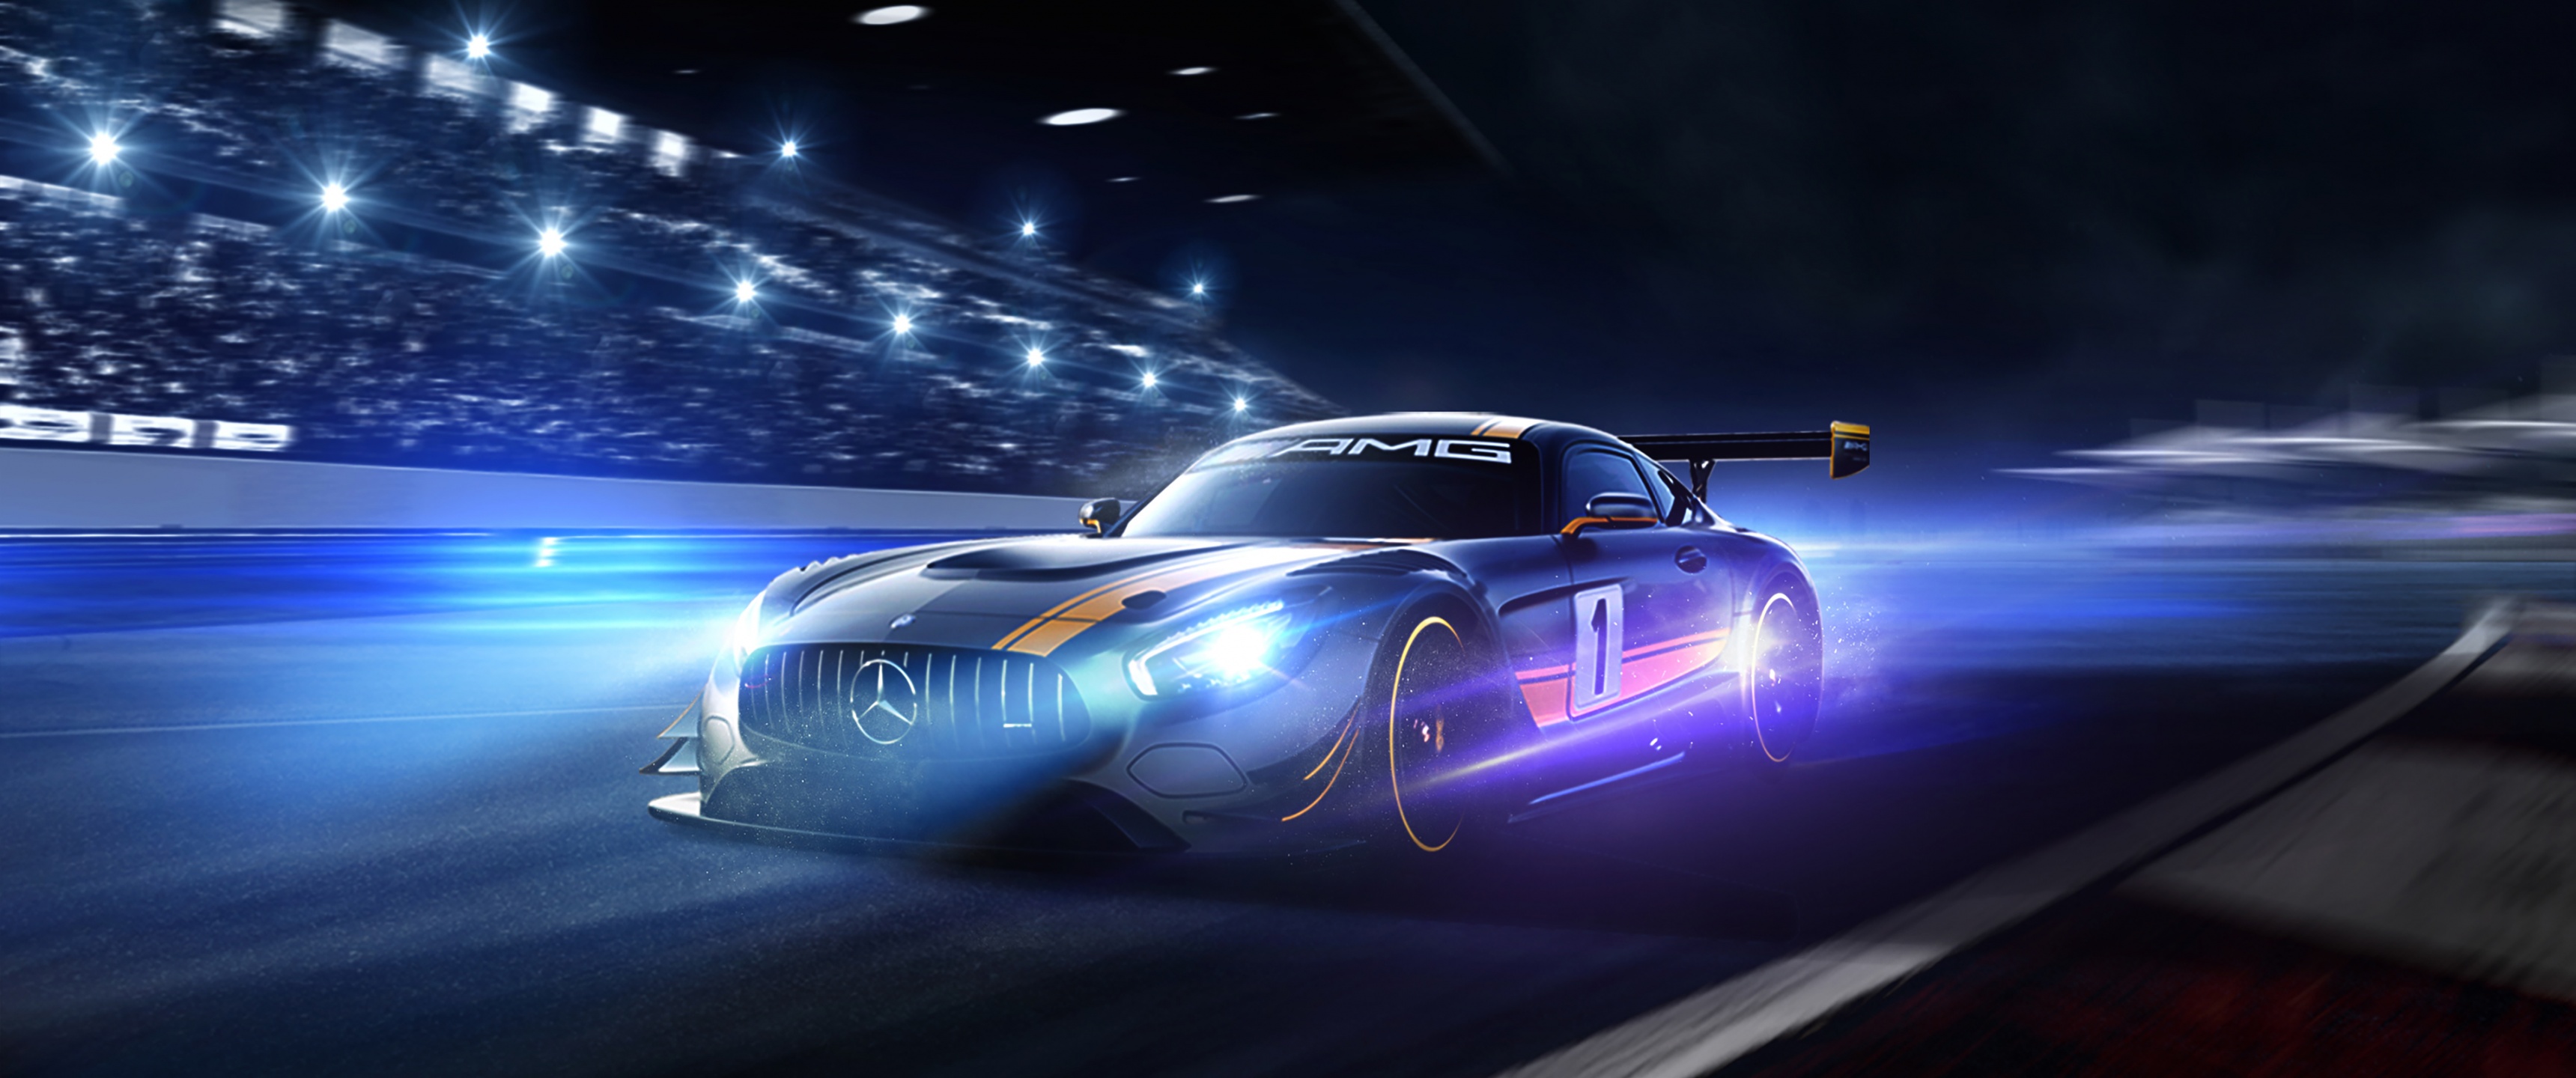 Mercedes AMG GT R Wallpaper 4K, Night, Racing Track, Cars